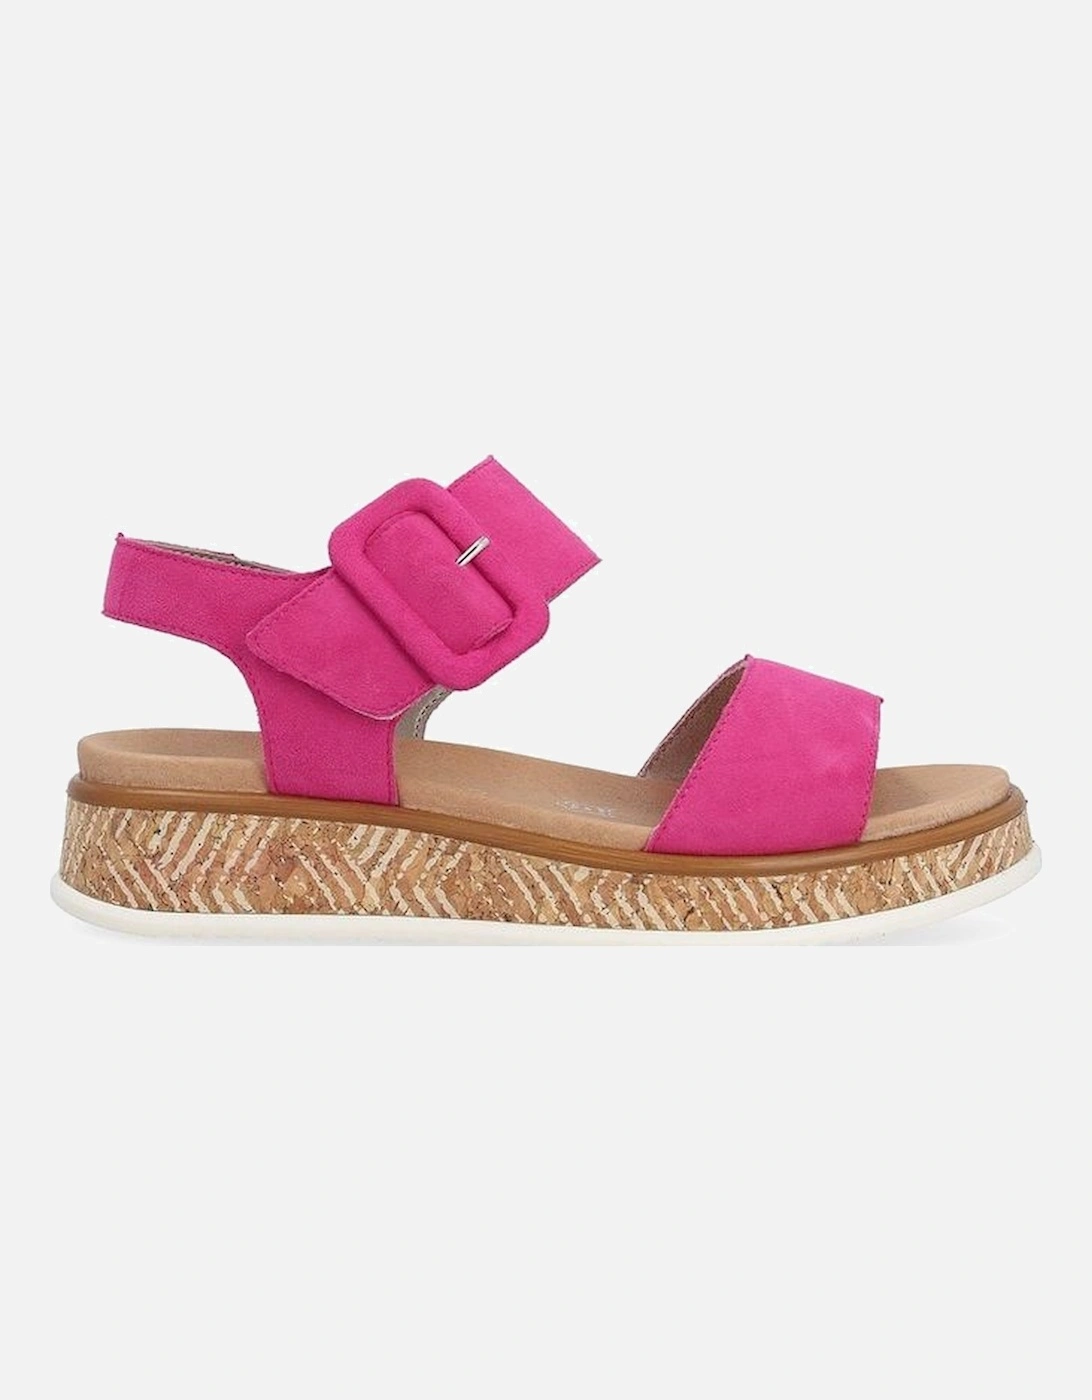 ladies sandals W0800-31 in Pink